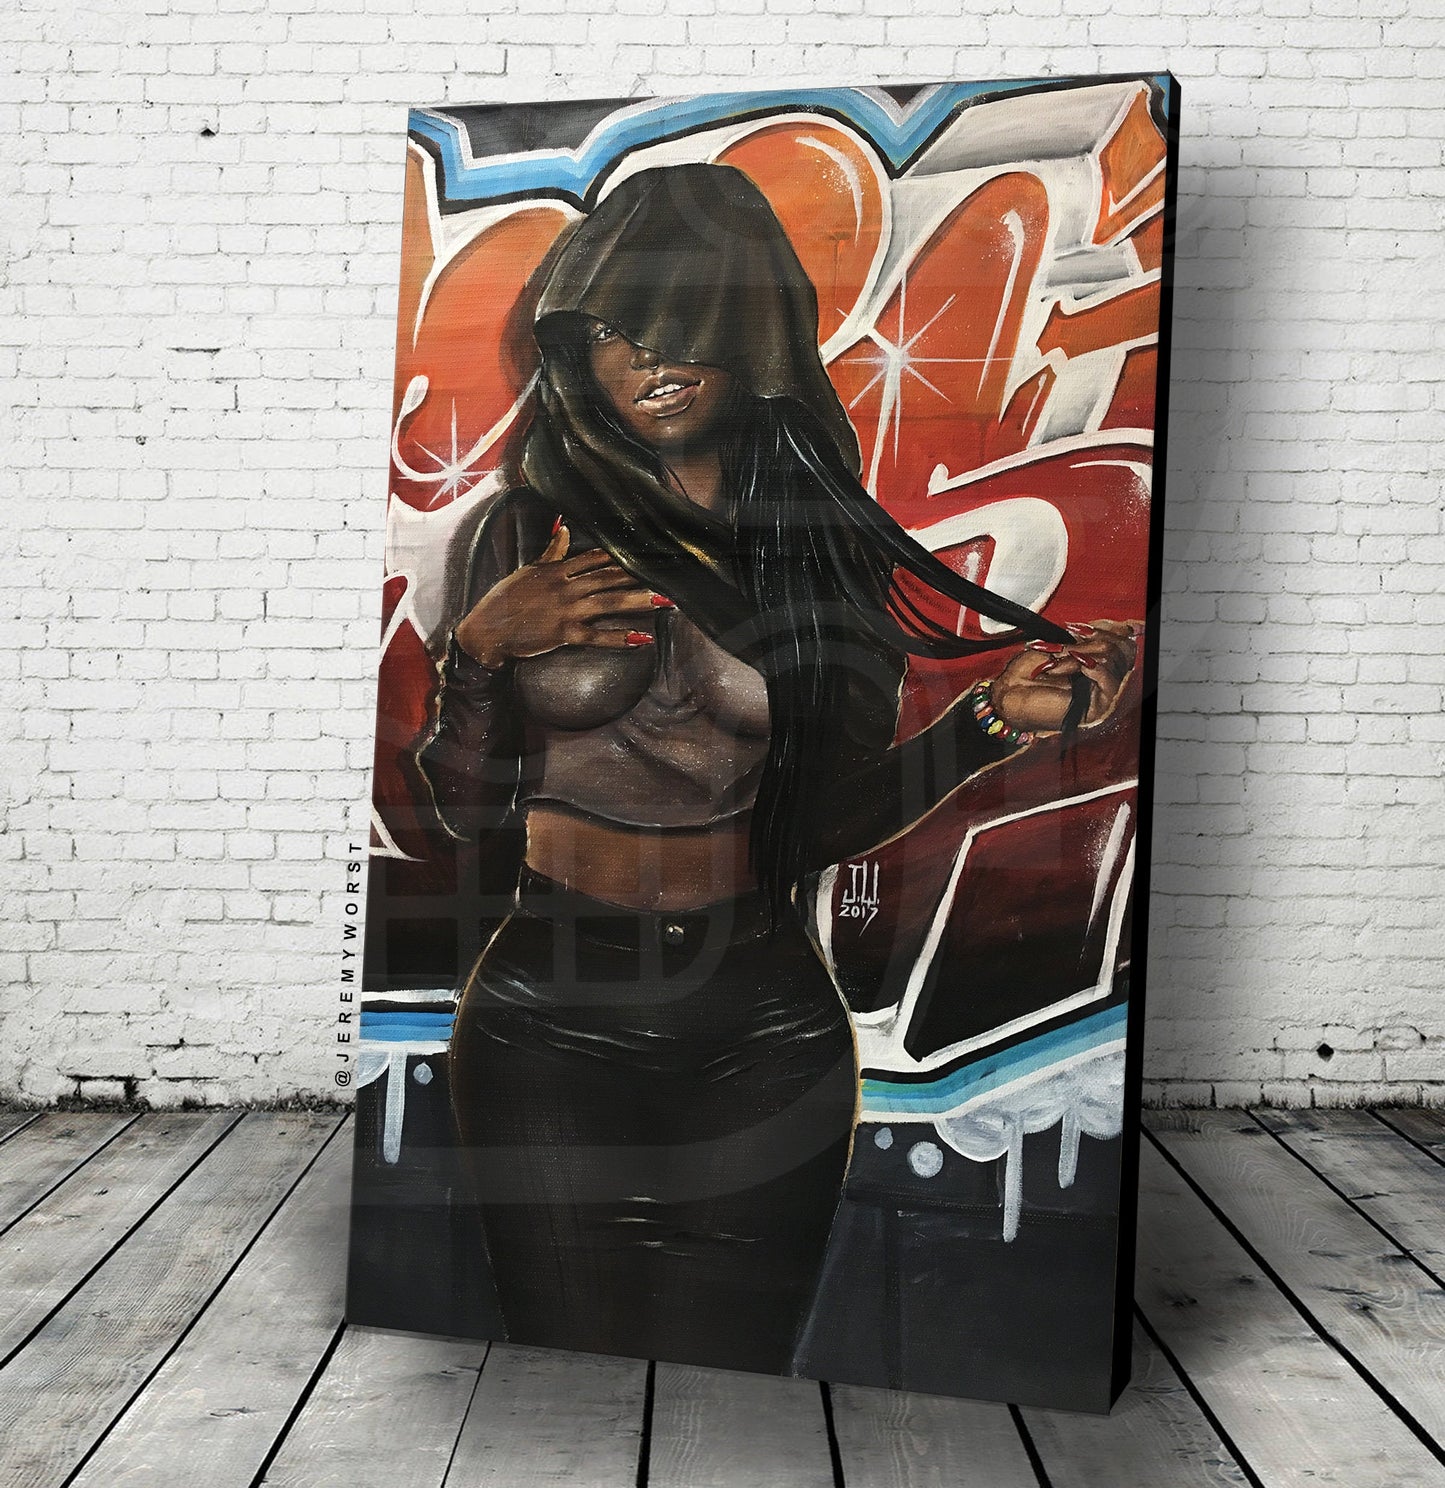 JEREMY WORST "Scarf" Sexy African American Graffiti Urban Street Art Hero Woman Nubian Queen Black Girl Canvas wall NSFW Decor Poster Hair